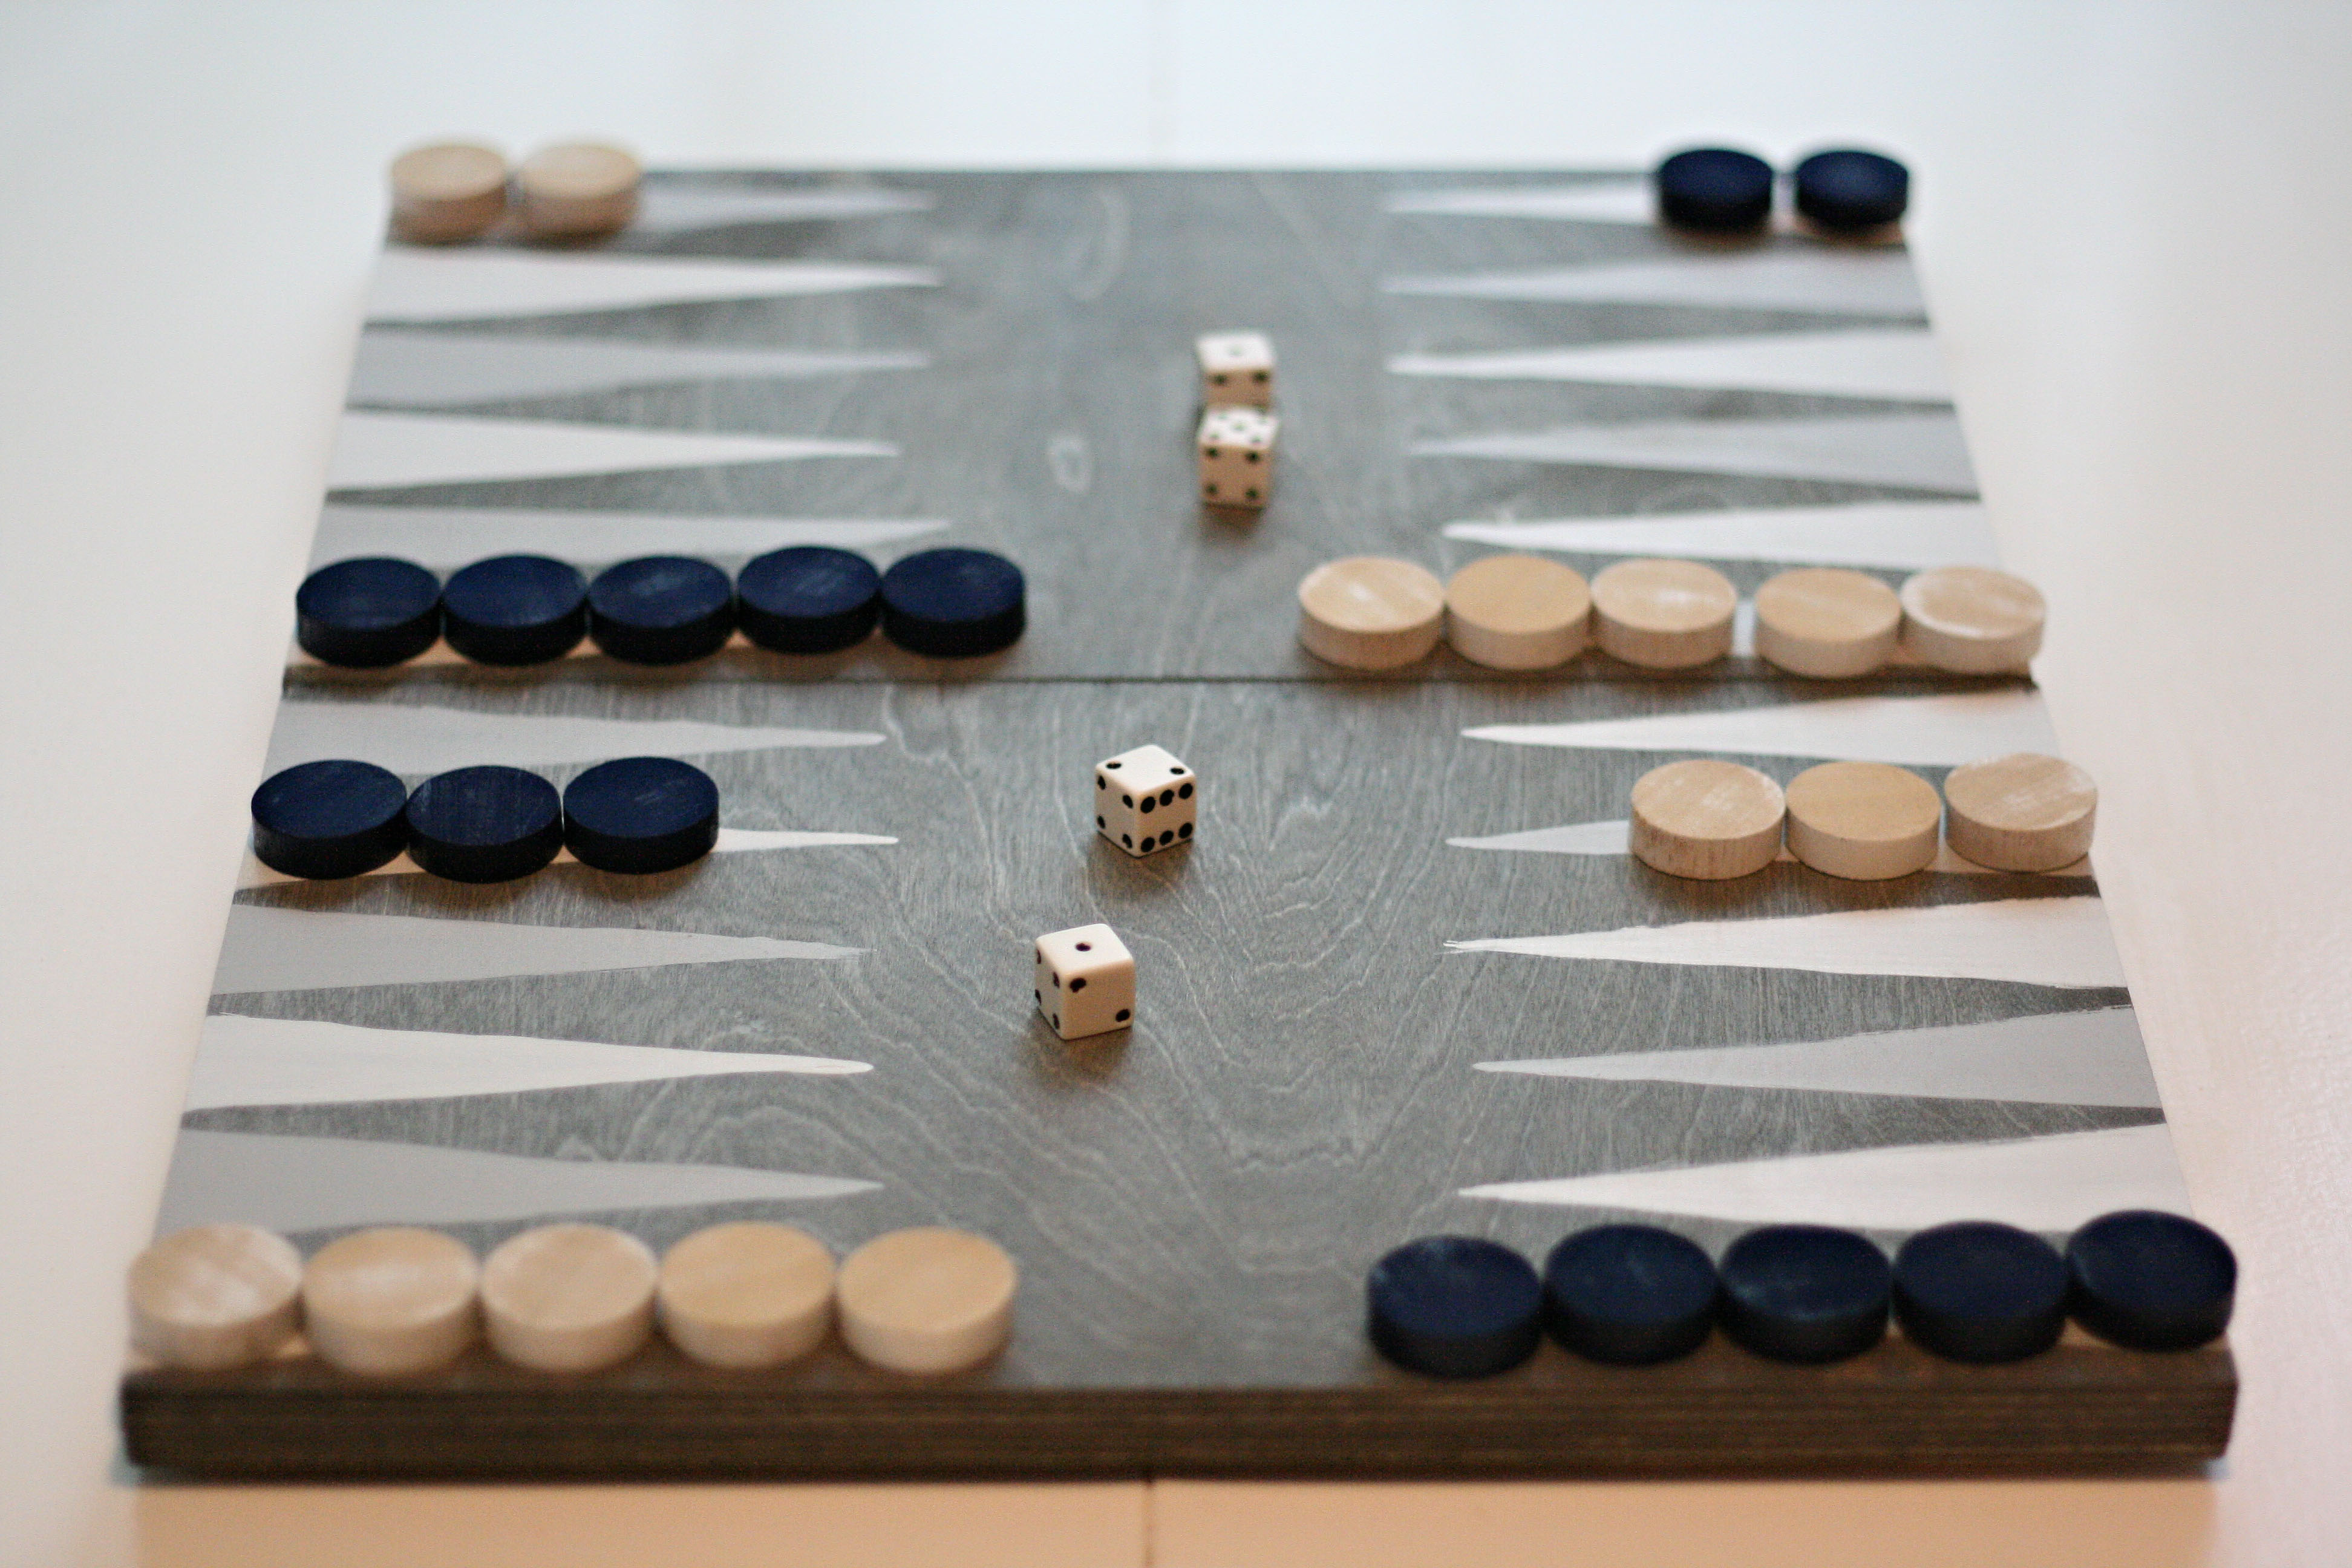 Backgammon Starting Position